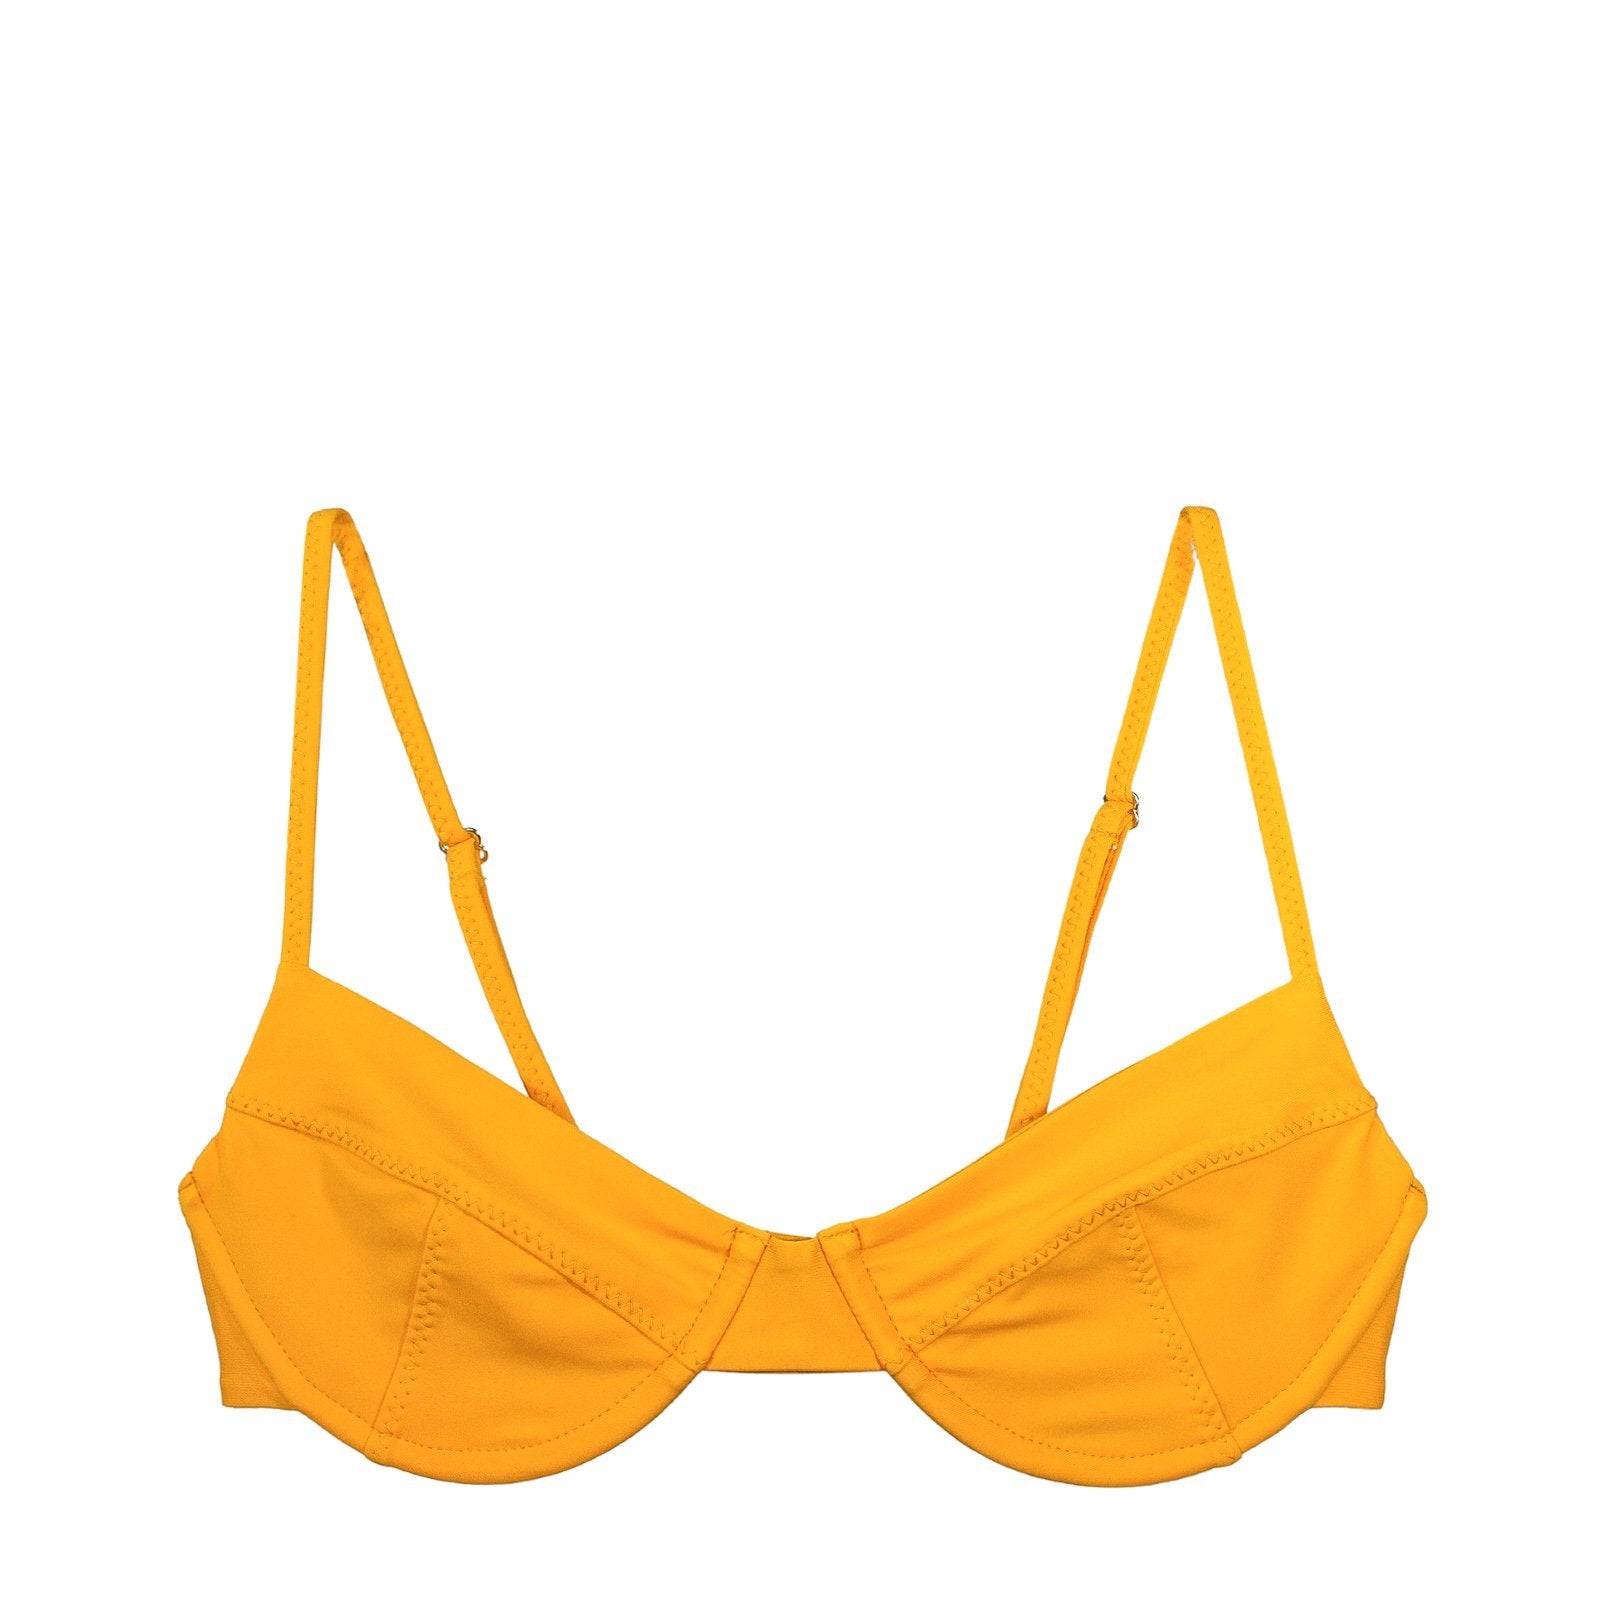 yellow orange underwire bikini top with adjustable straps